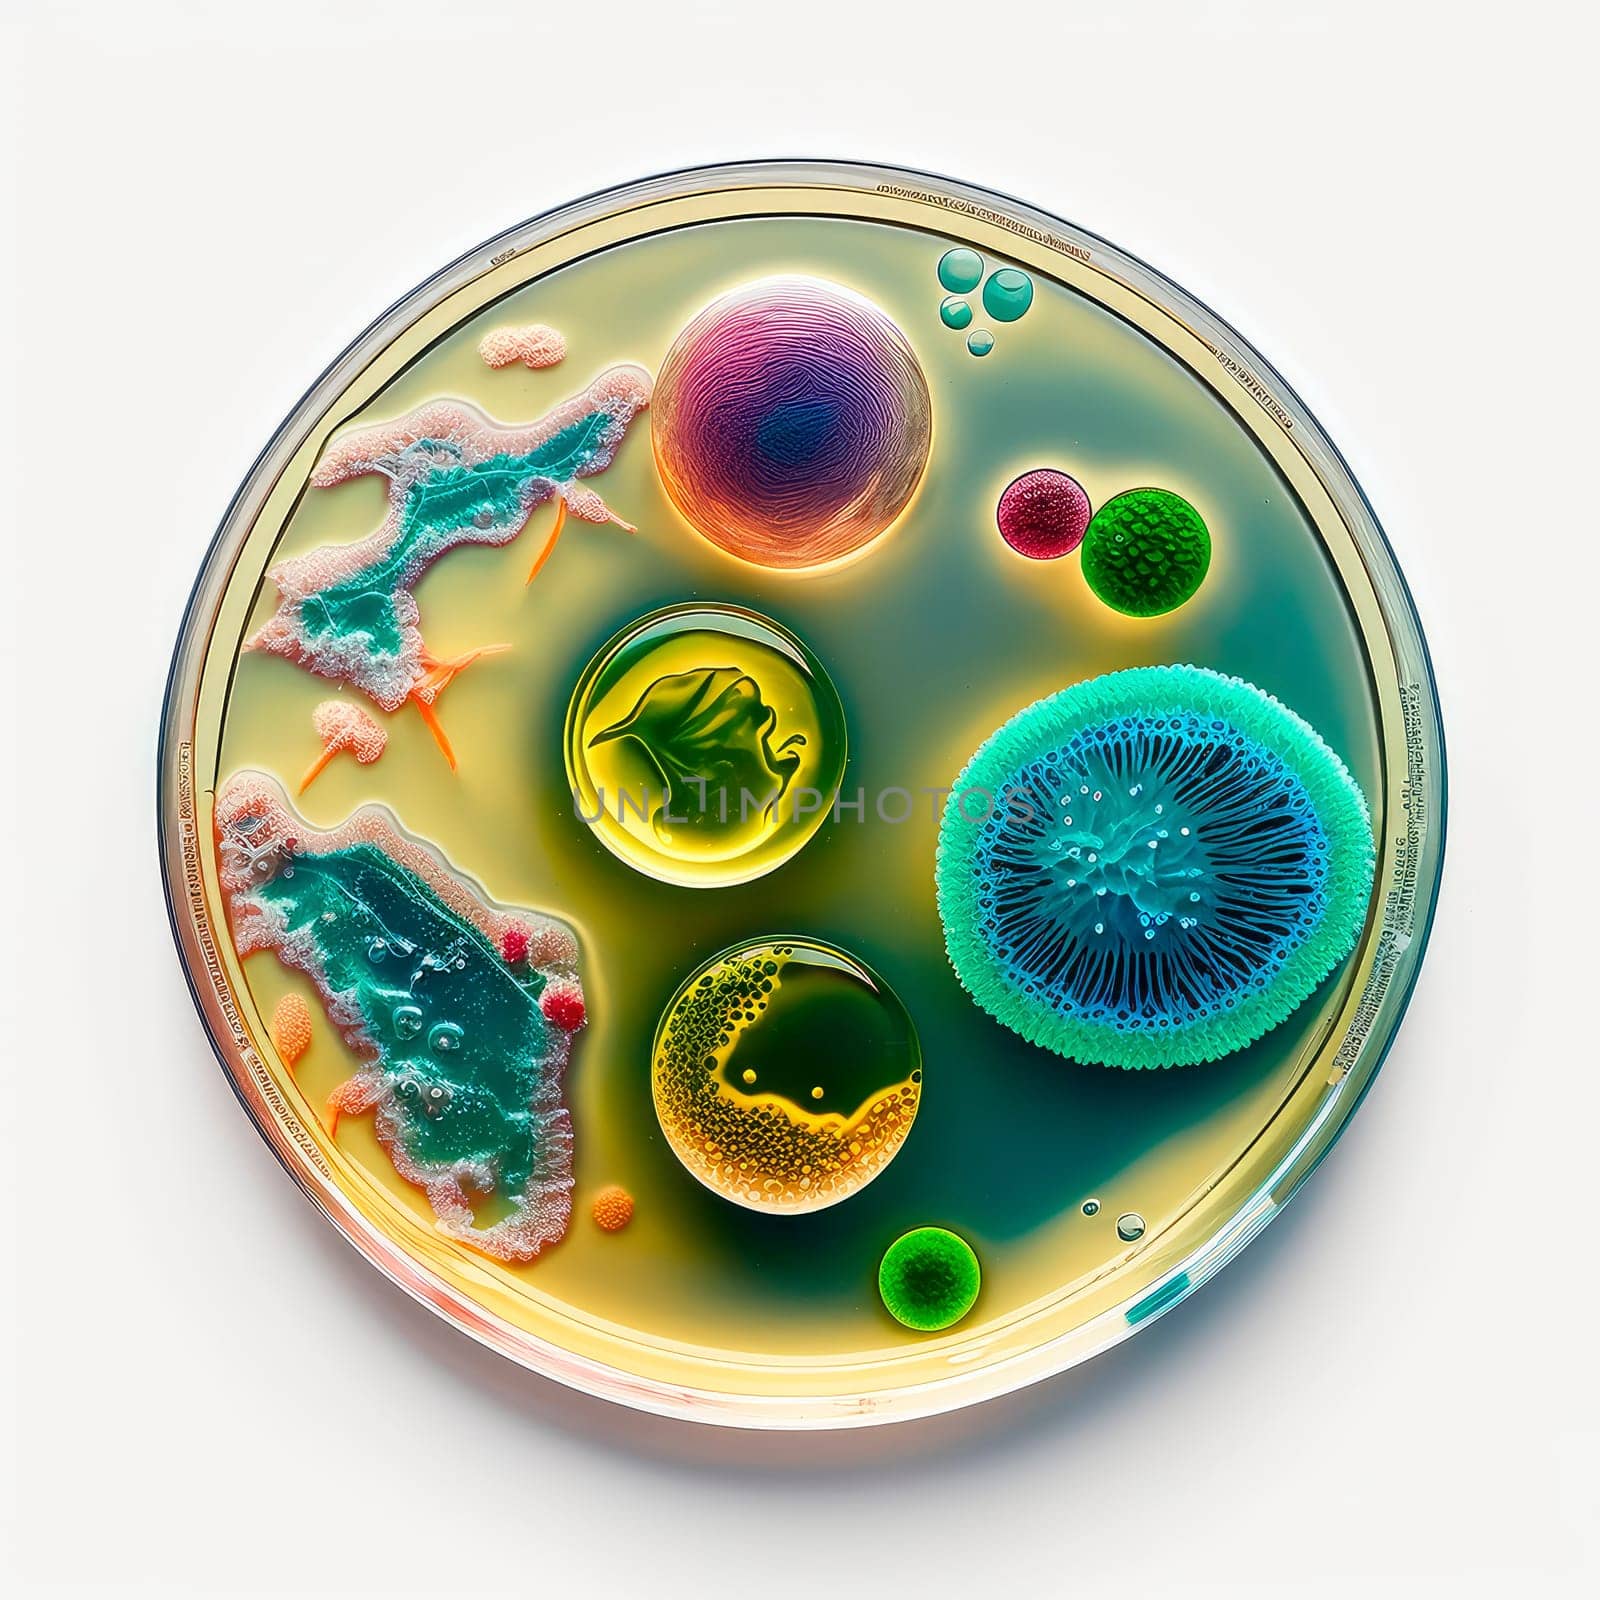 Laboratory petri dish bacteria grow. by yanadjana